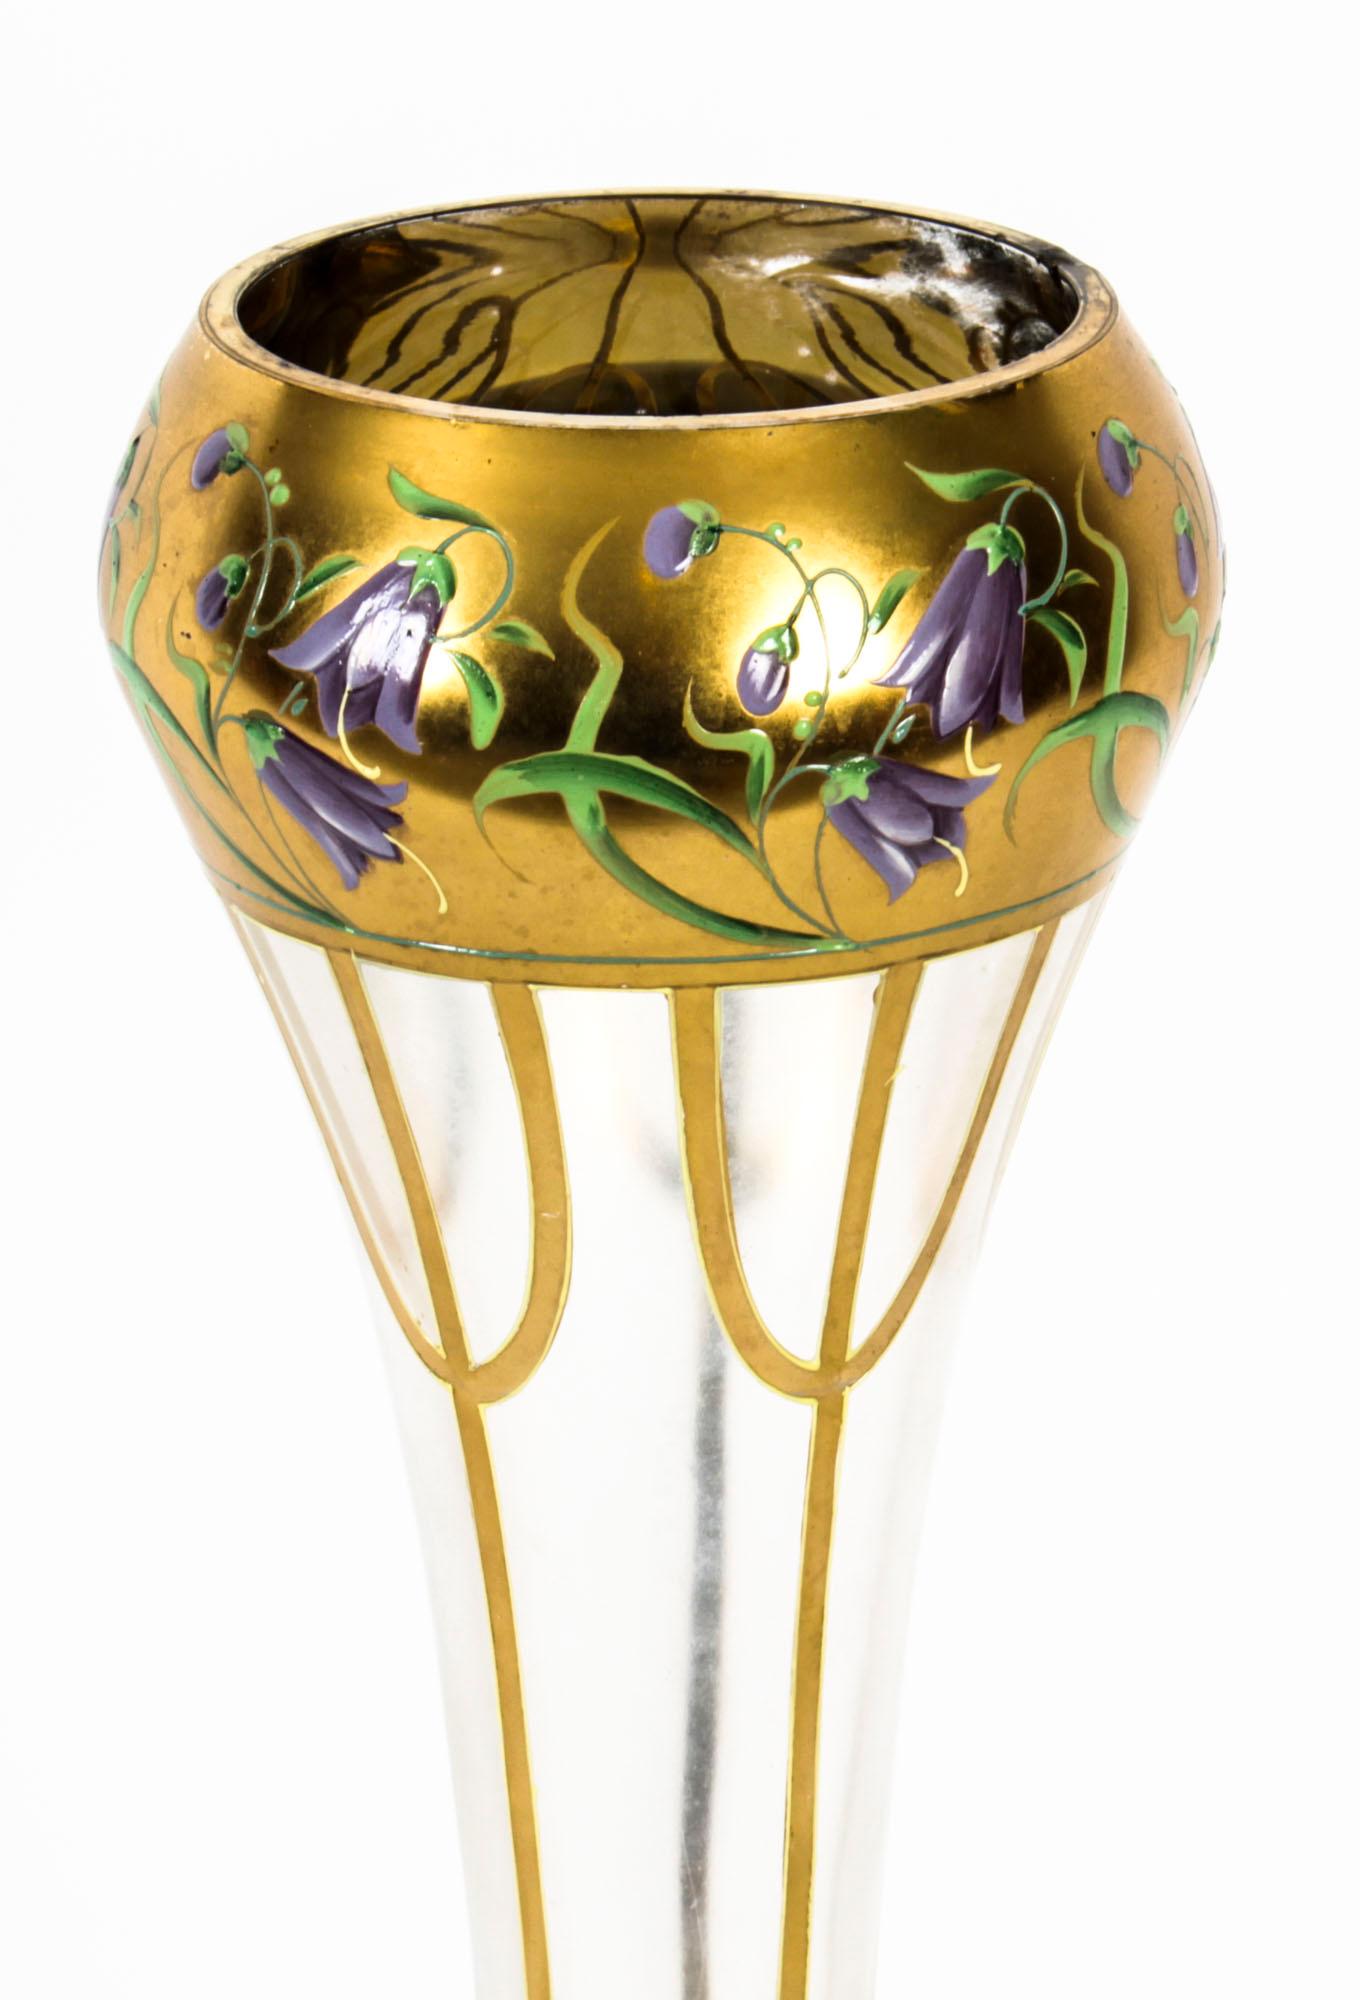 Antique French Art Nouveau Enameled Glass Vase, 19th Century 2